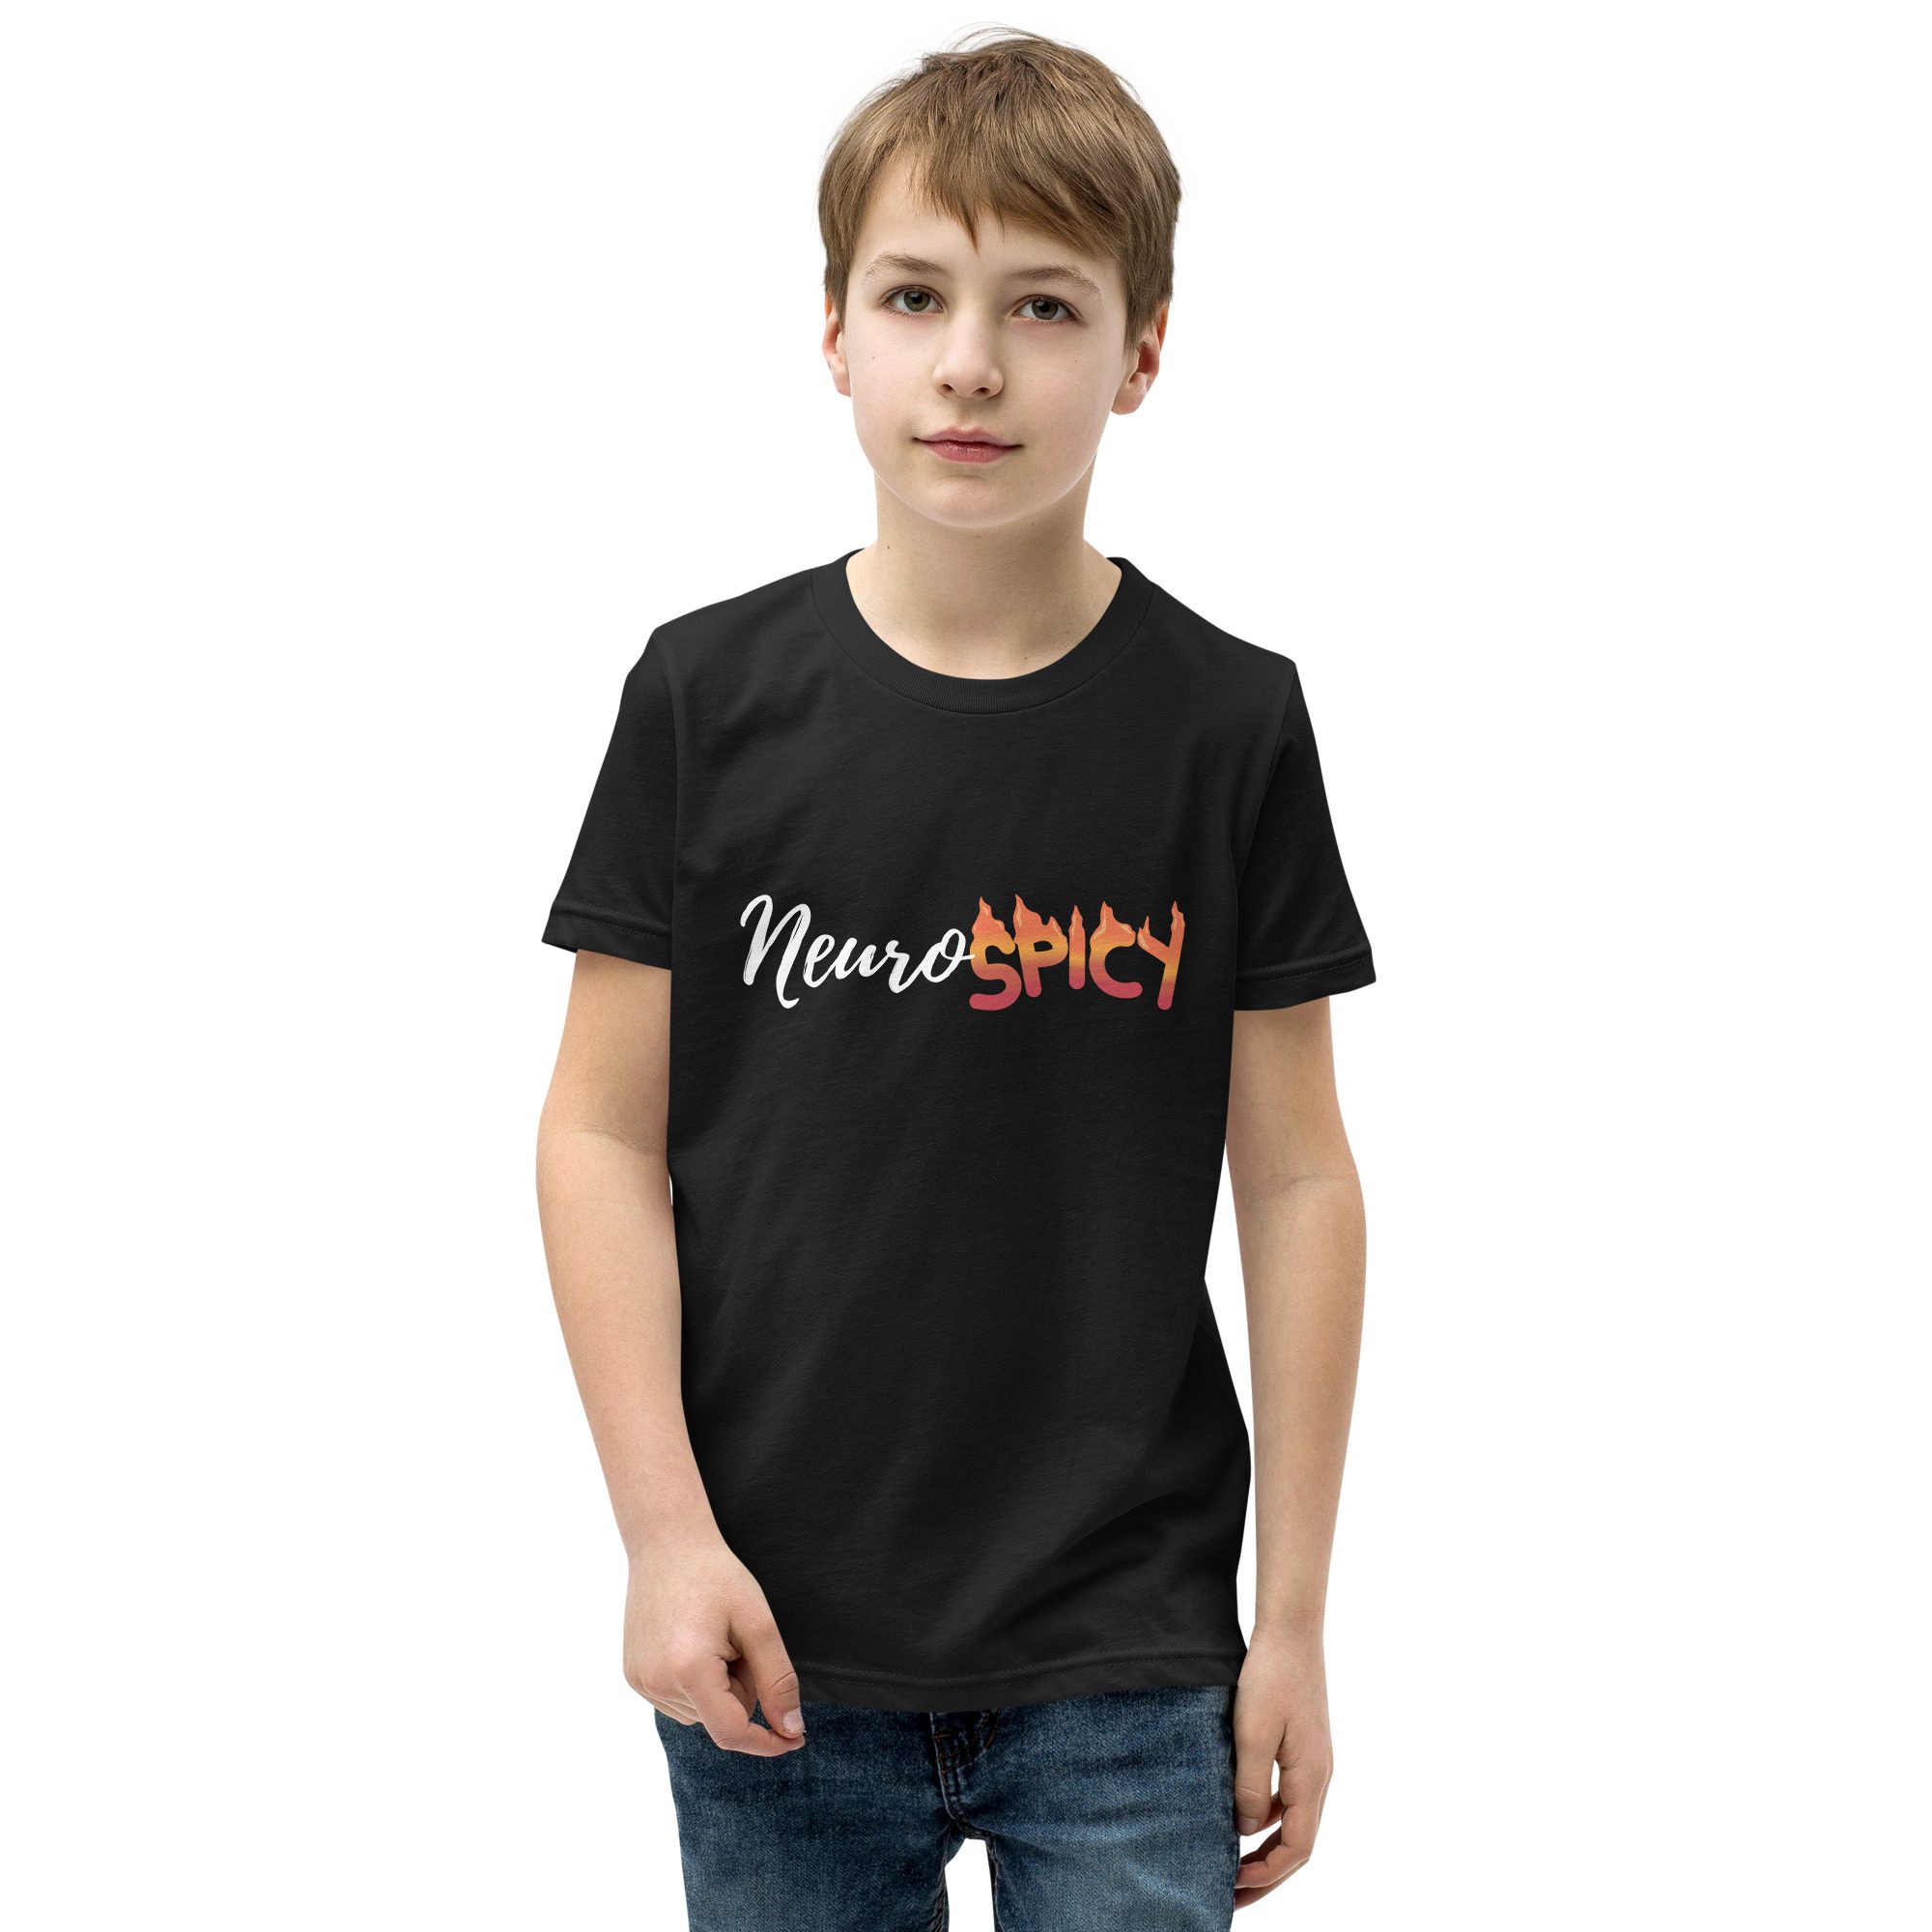 Neurospicy Autism ADHD Awareness Kids T-Shirt